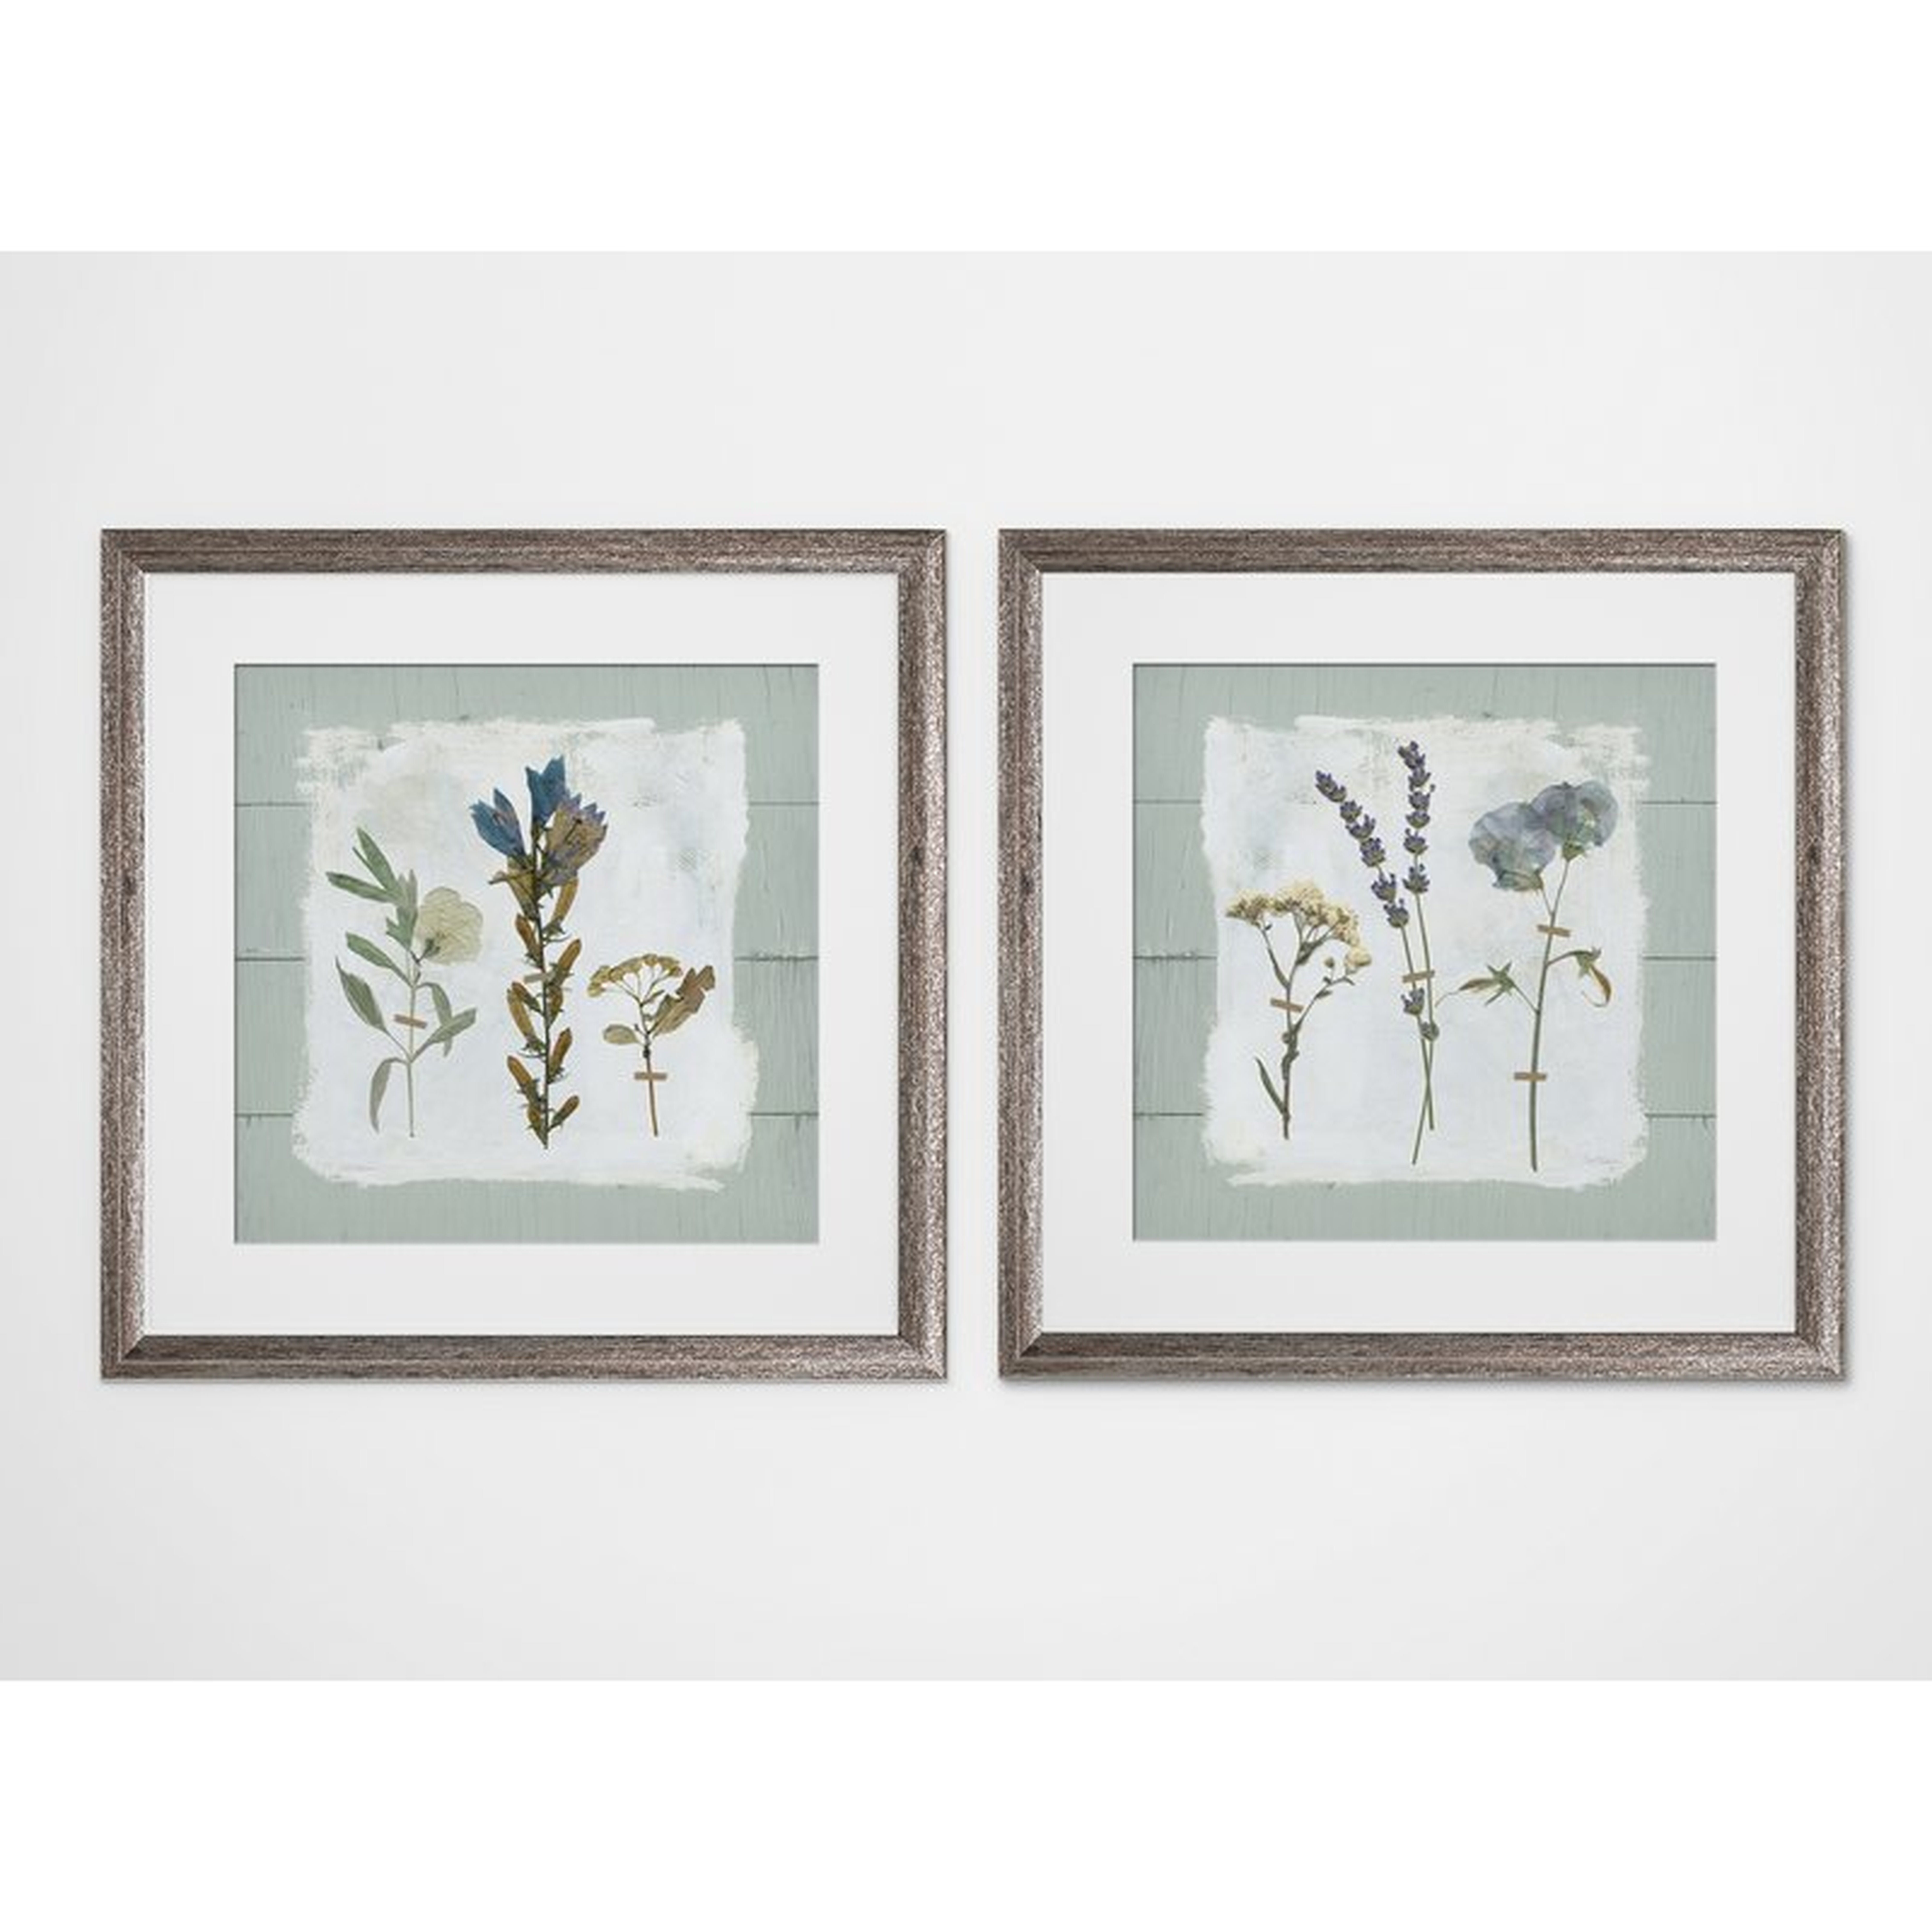 'Pressed Flowers on Shiplap' 2 Piece Framed Print Set - Birch Lane